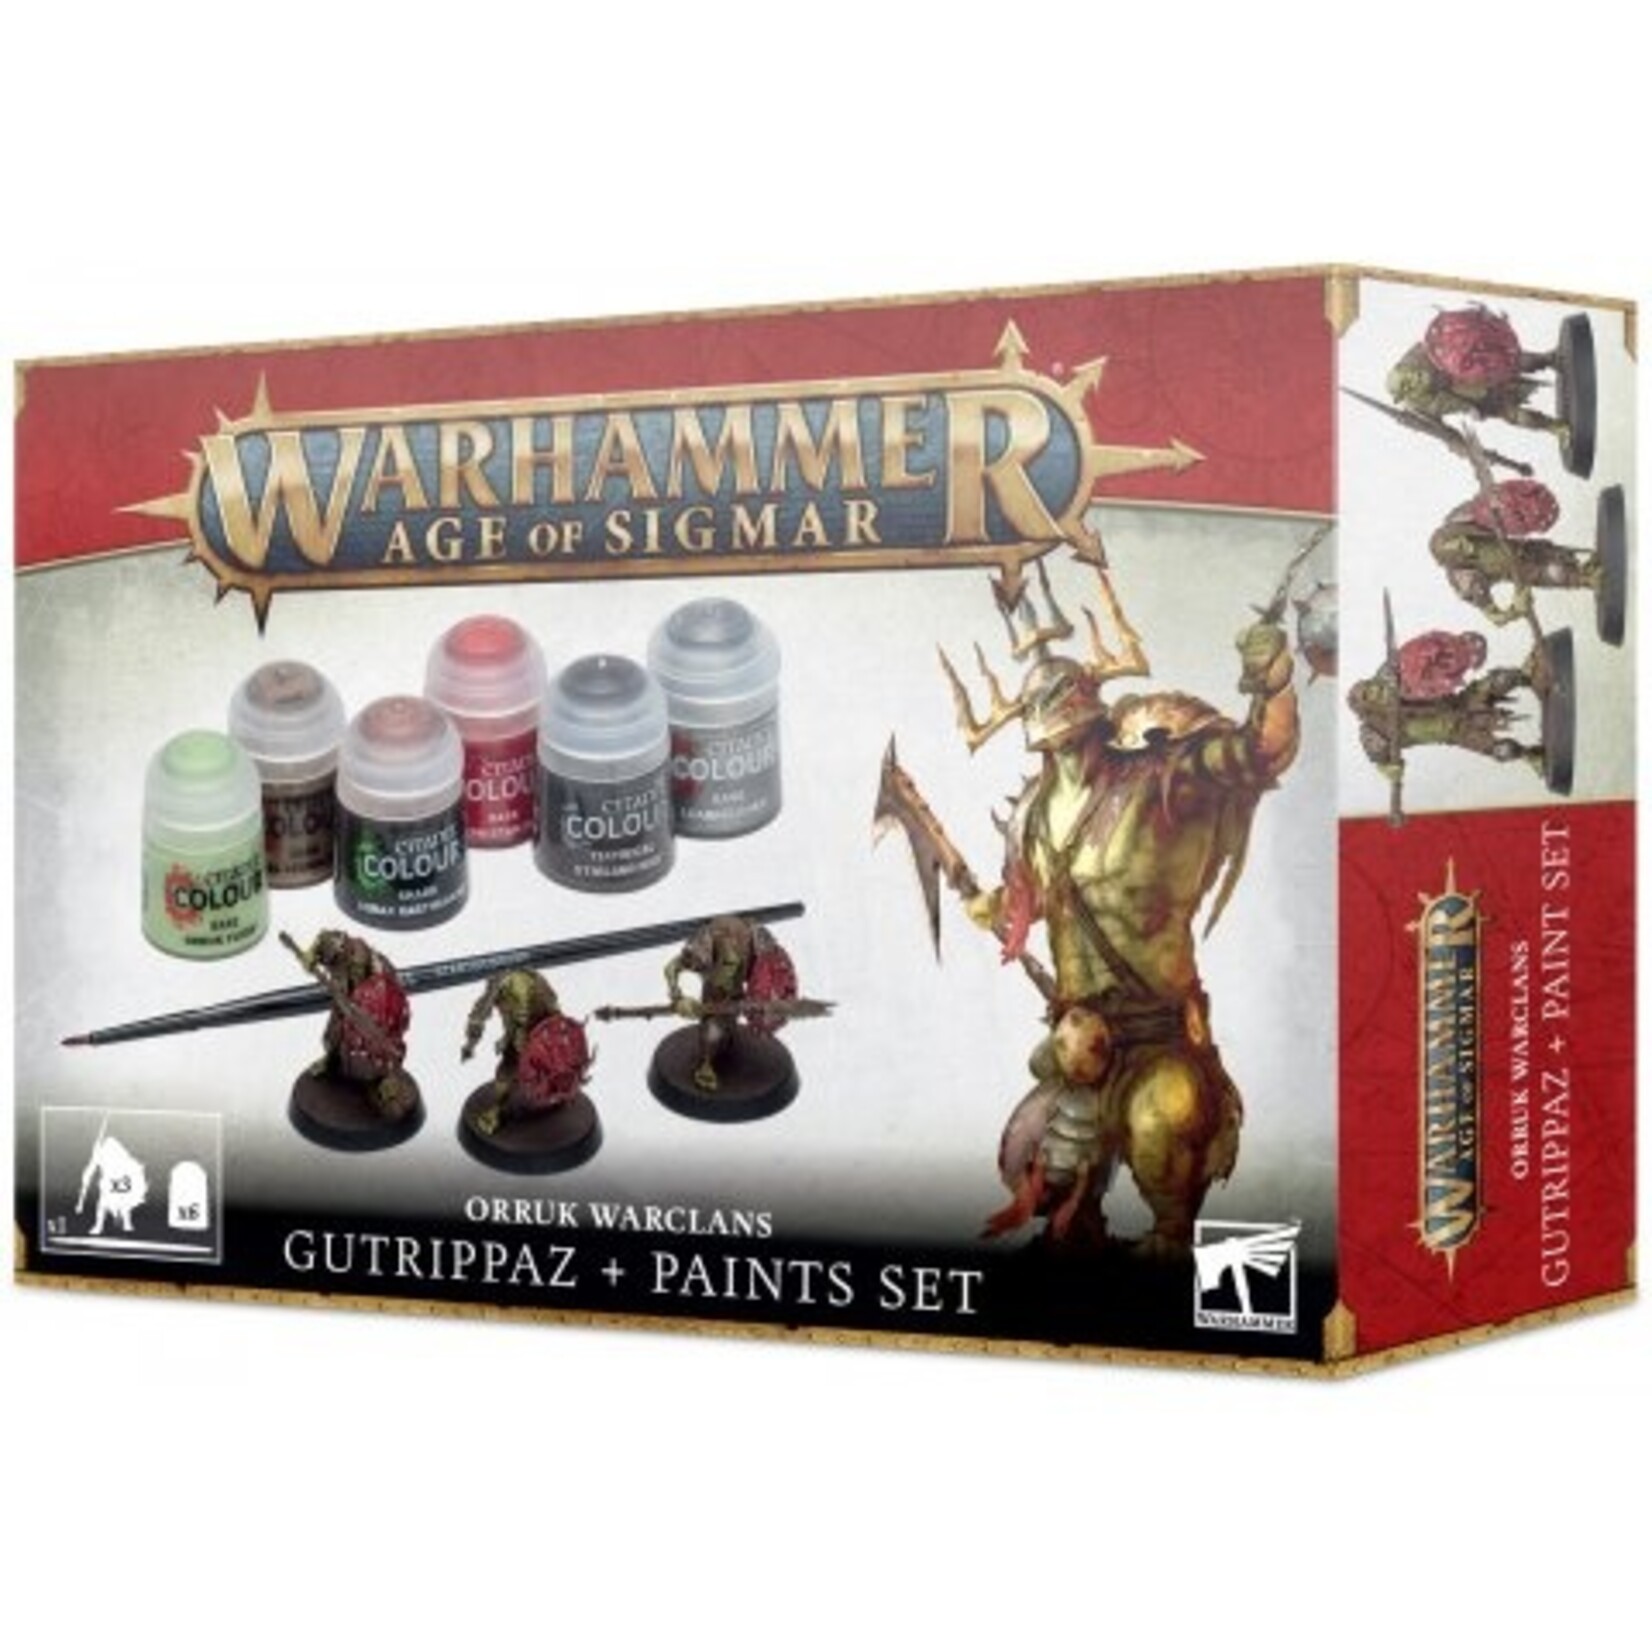 Warhammer: age of sigmar Orruk Warclans: Gutrippaz + Paints set